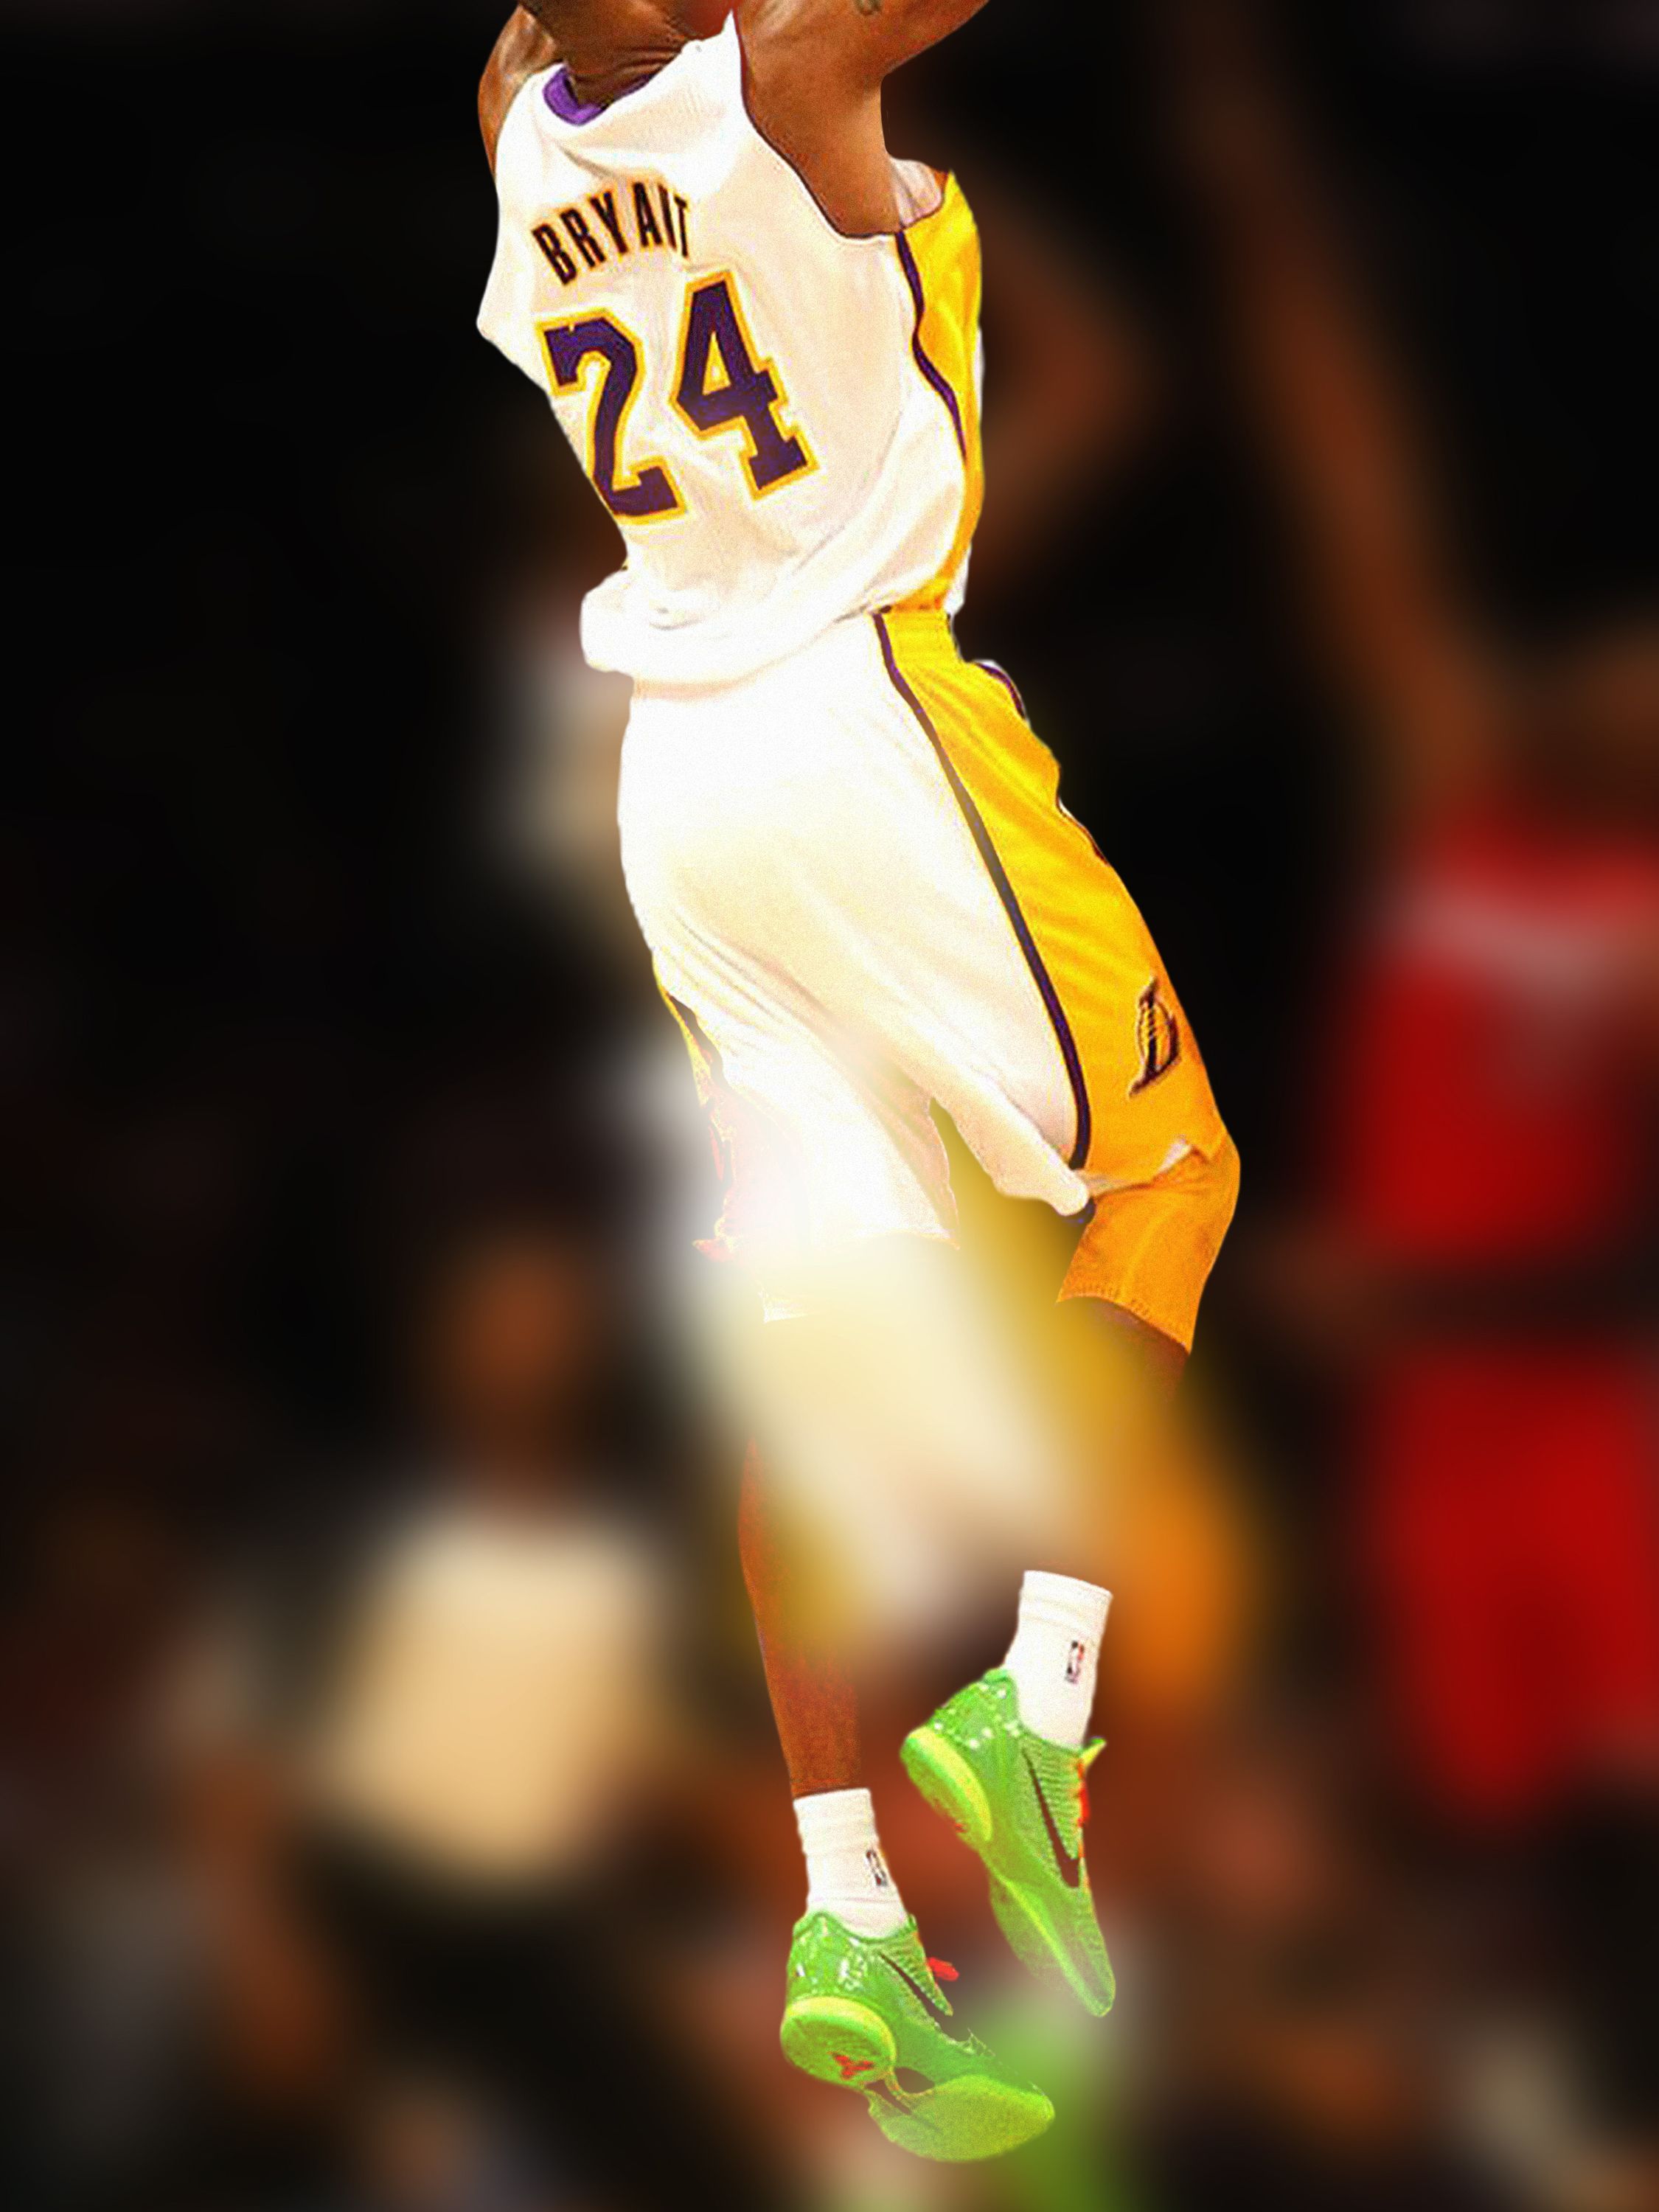 Kobe Bryant's signature shoes keep his memory close to NBA players